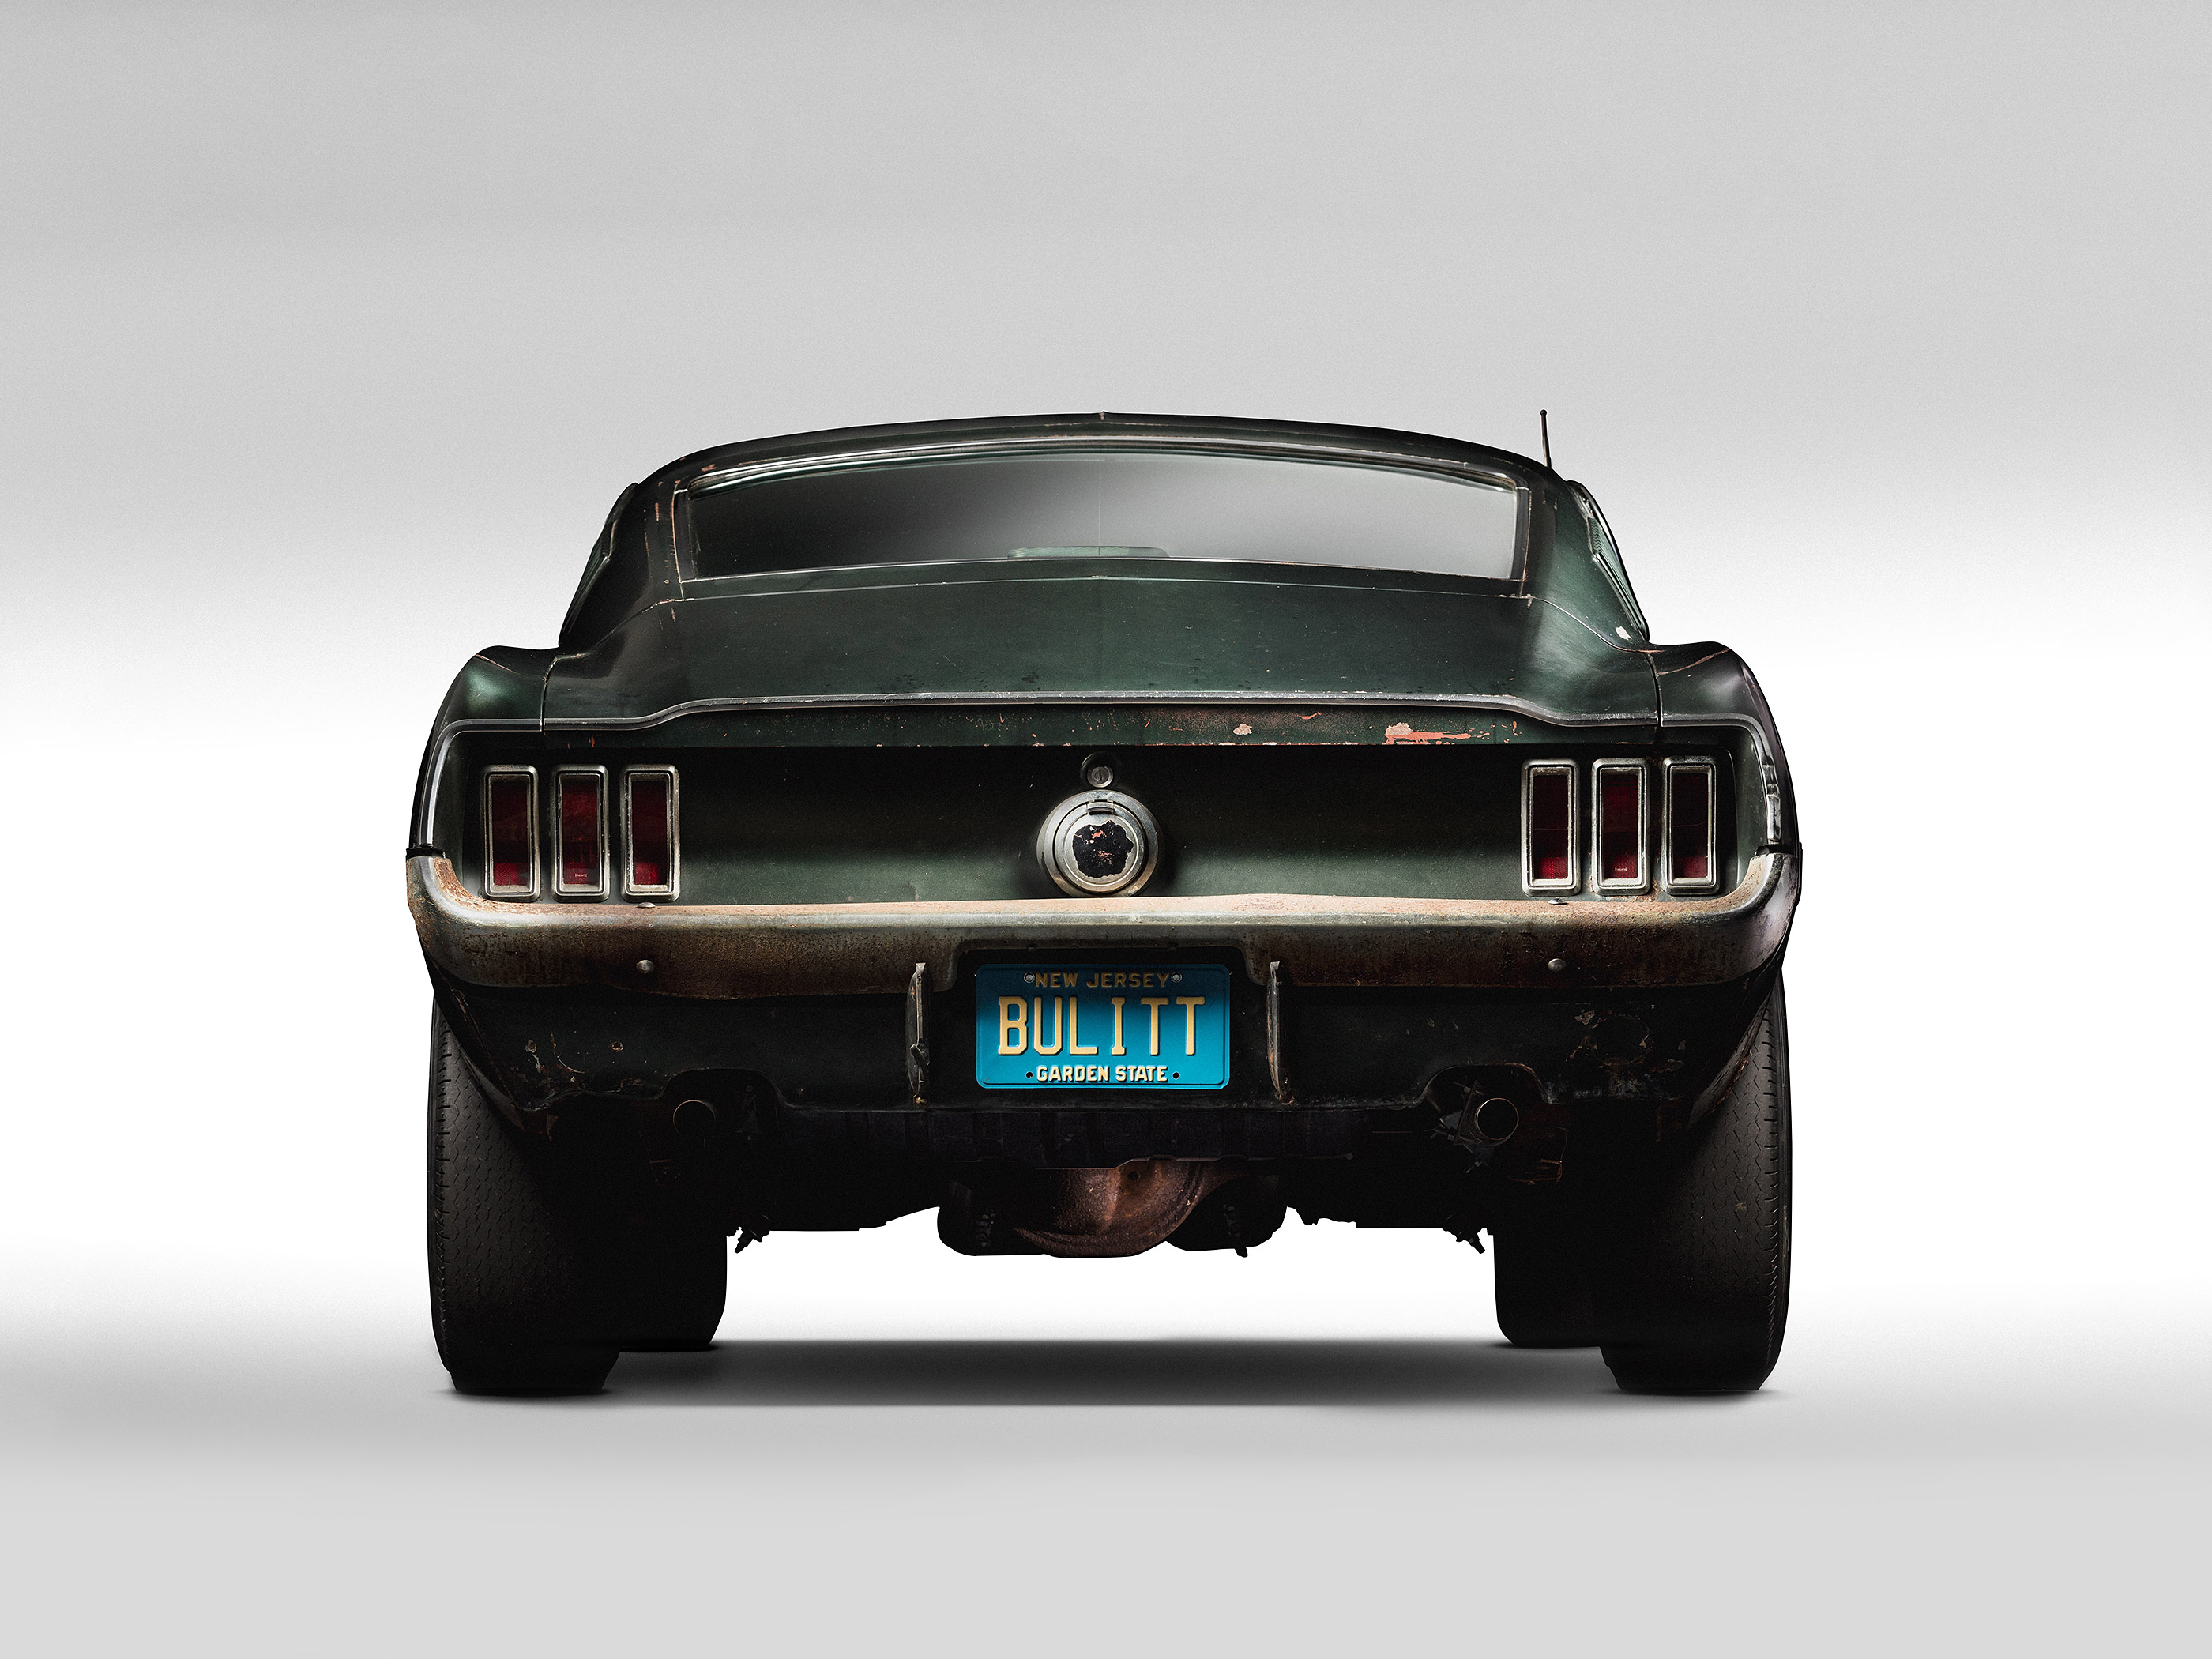  1968 Ford Mustang GT Bullitt Wallpaper.